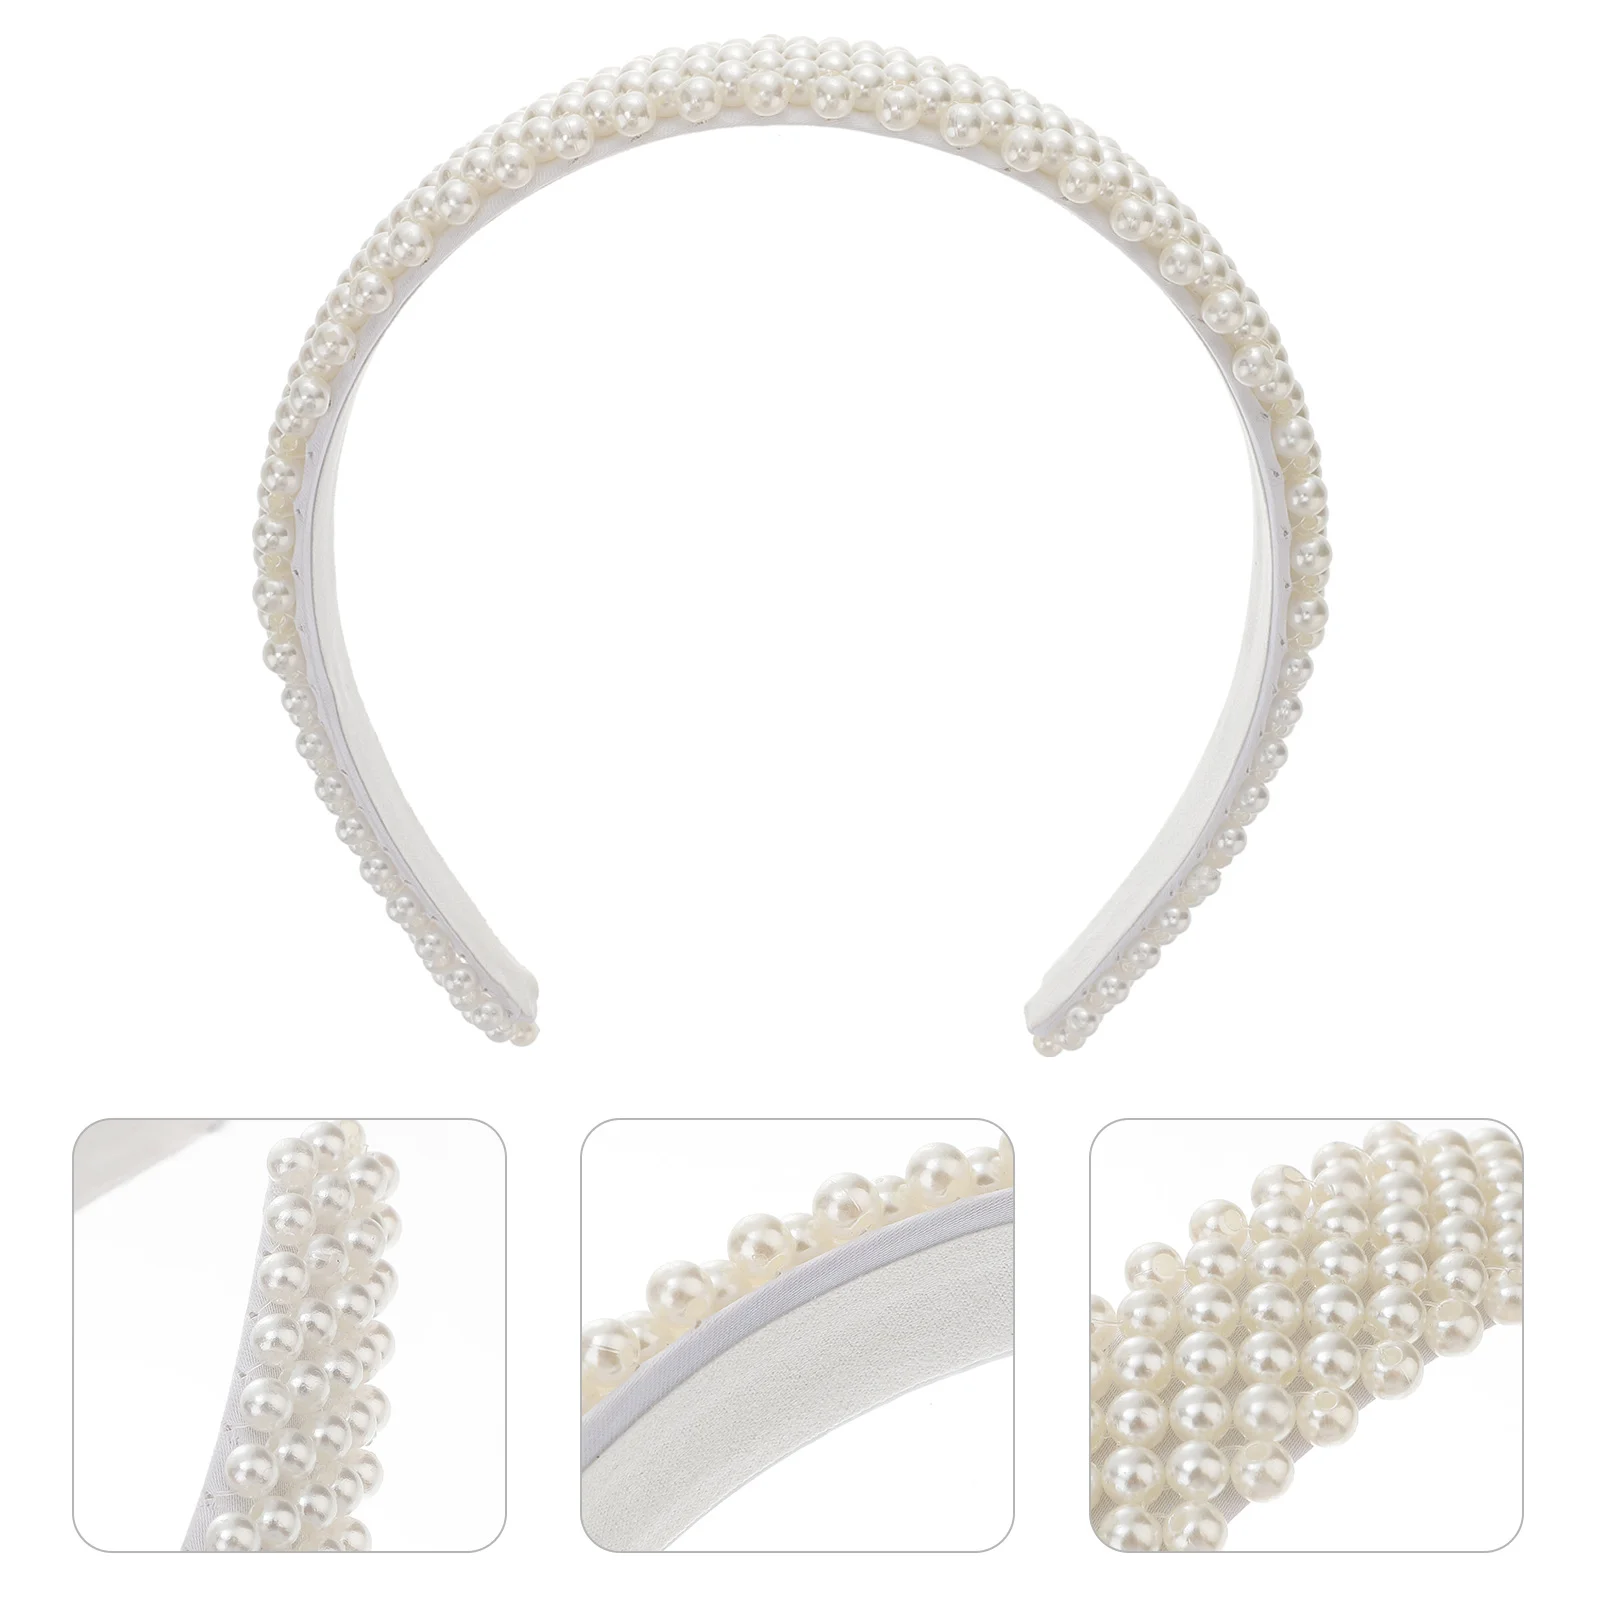 

Padded Pearl Headband White Pearl Bridal Hairband Baroque Wedding Headpiece for